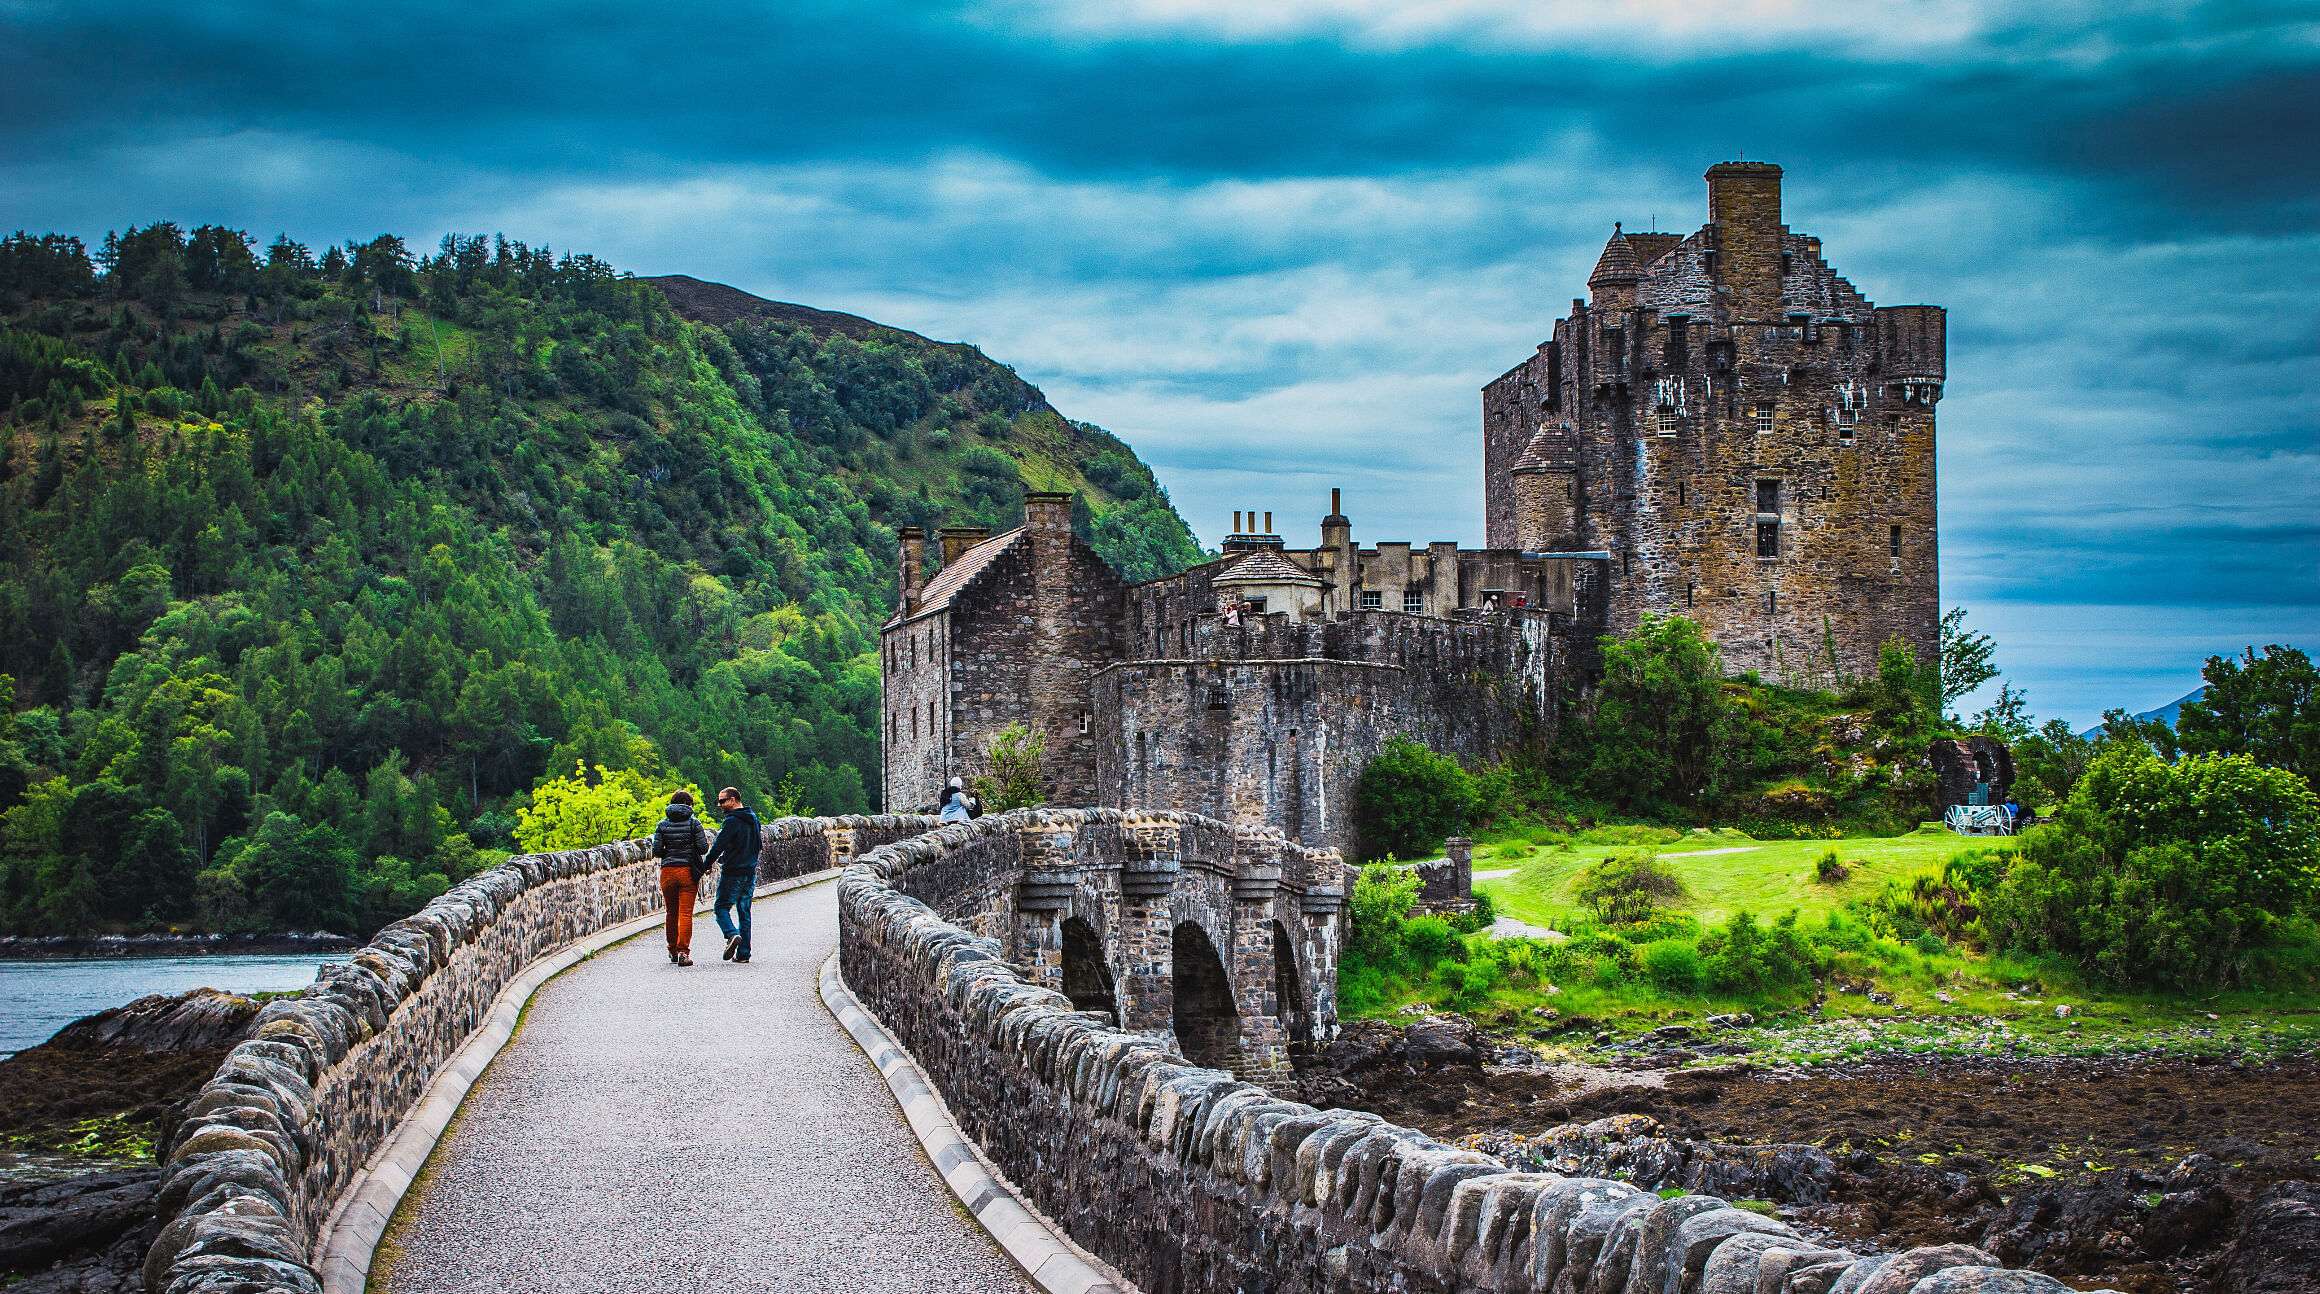 Castle in the Scottish highlands